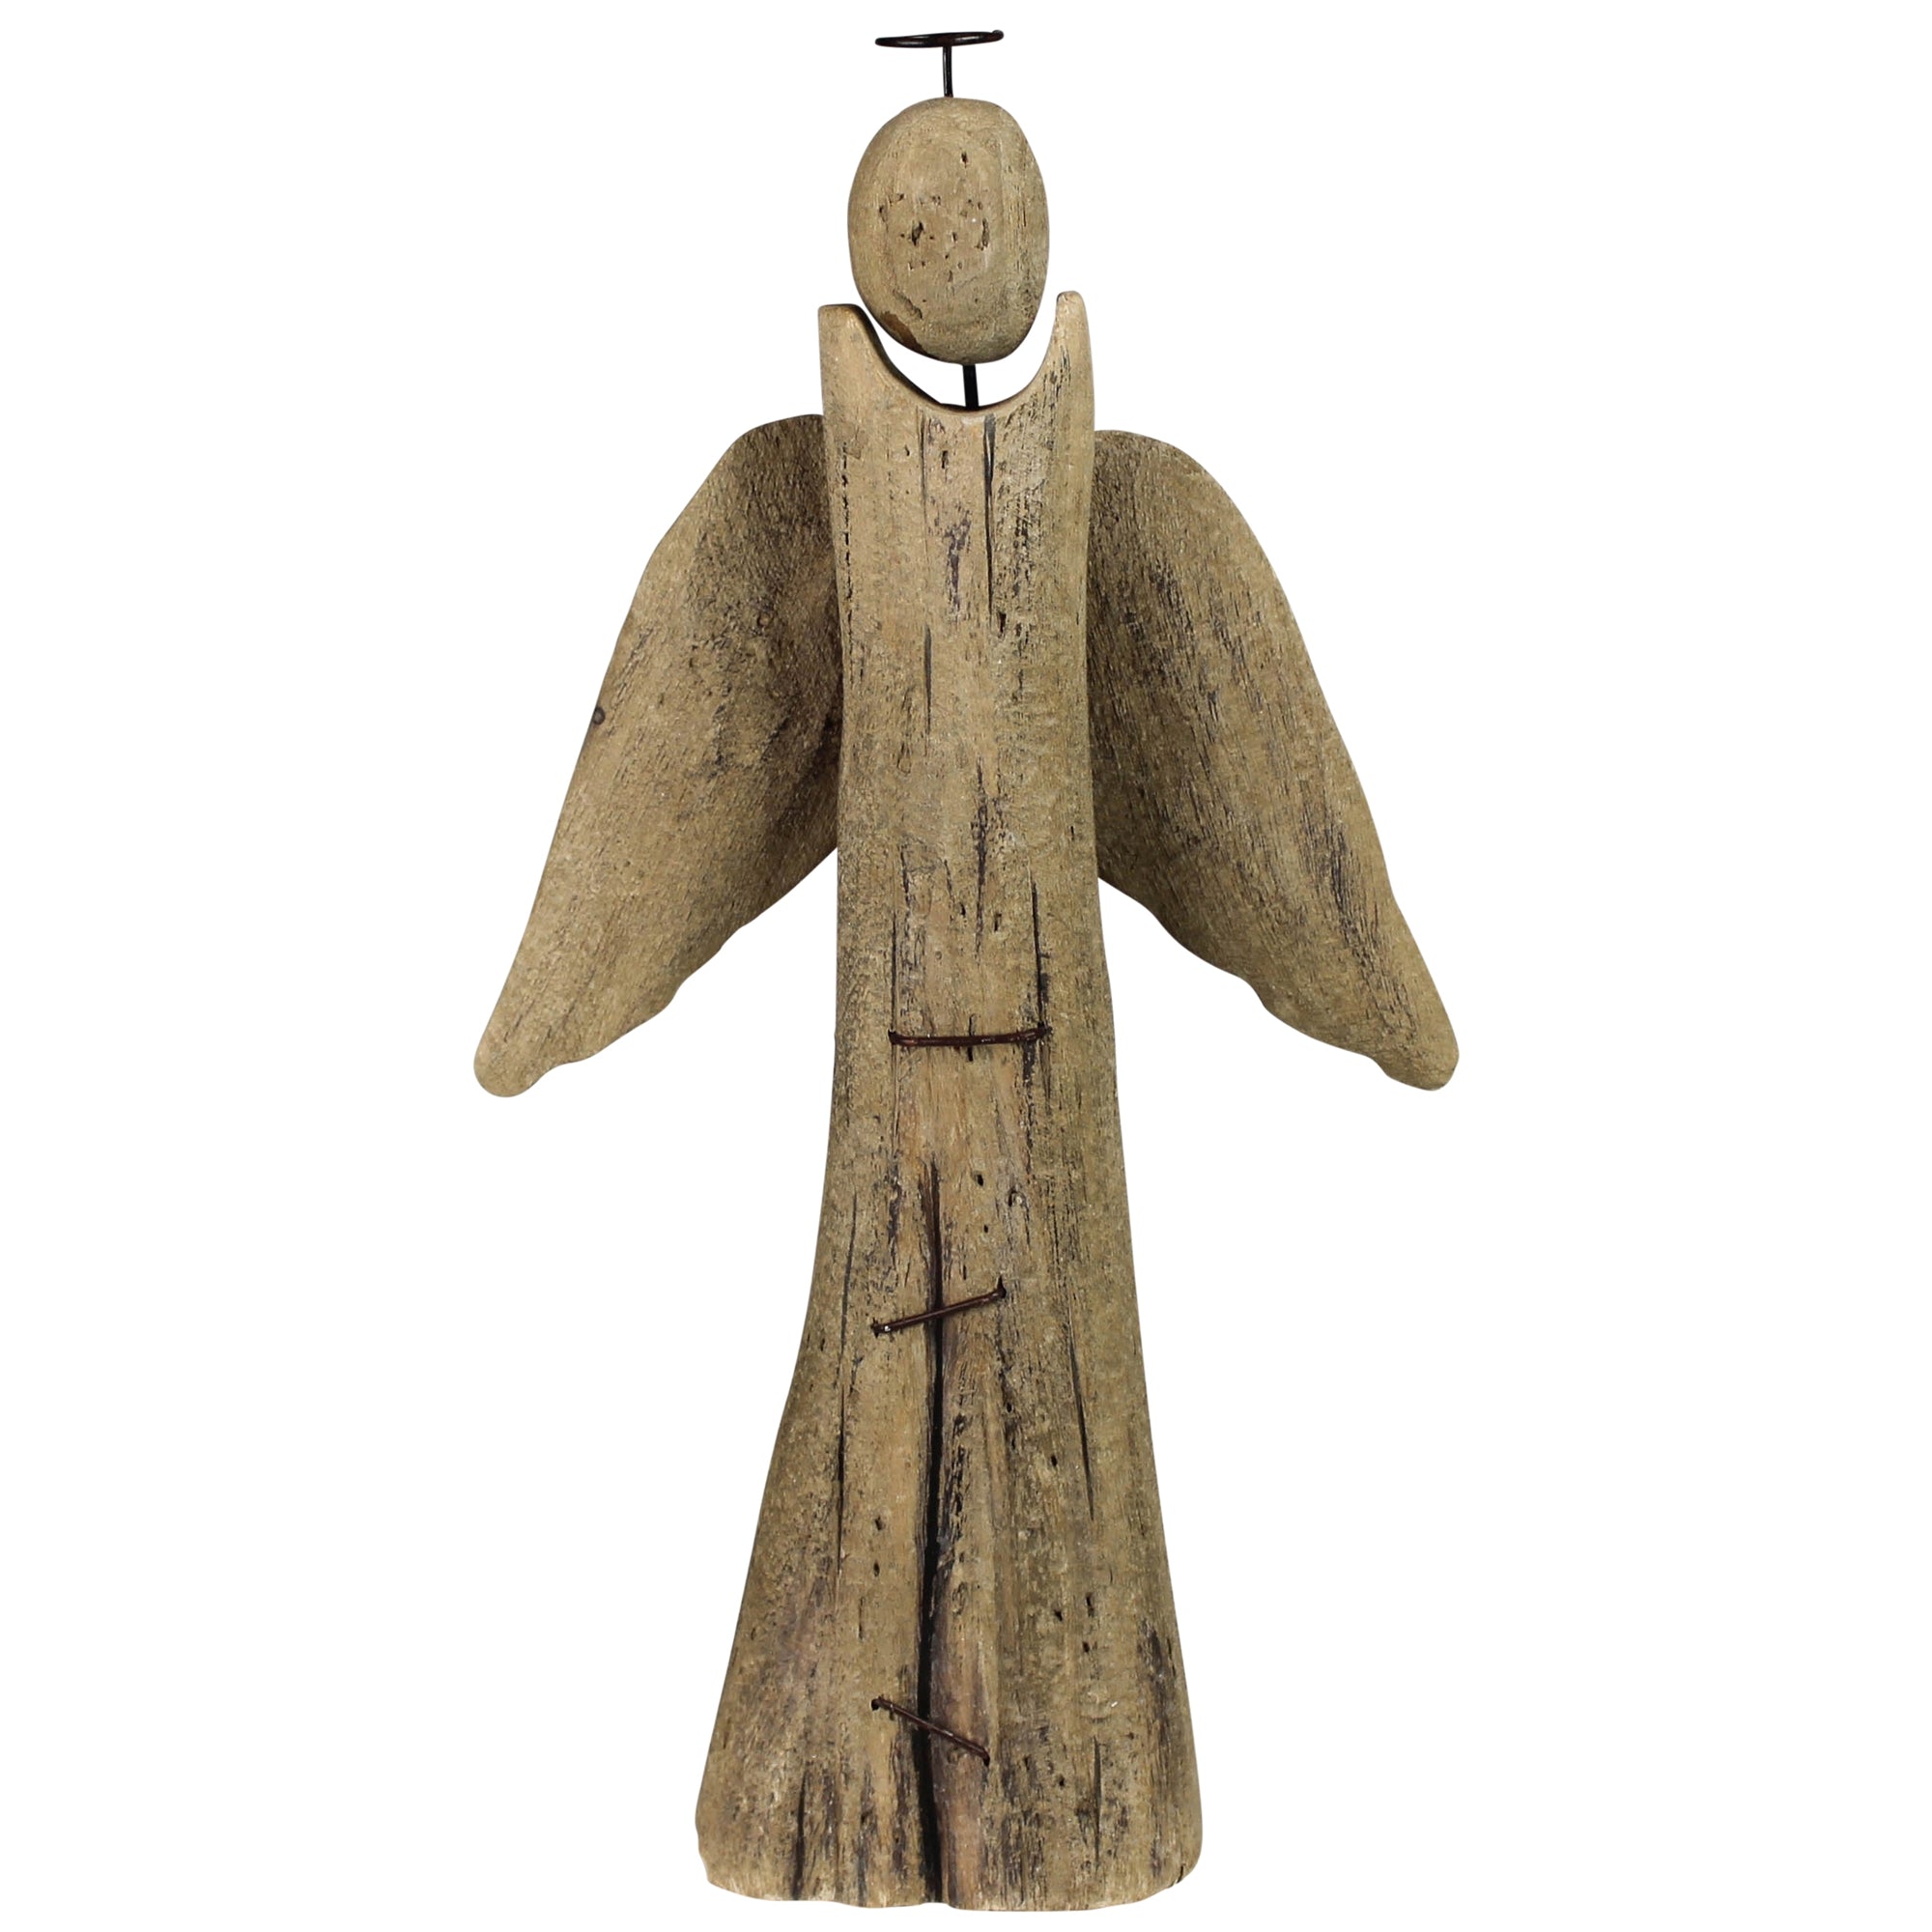 Kiri Wood Rustic Angel (L)